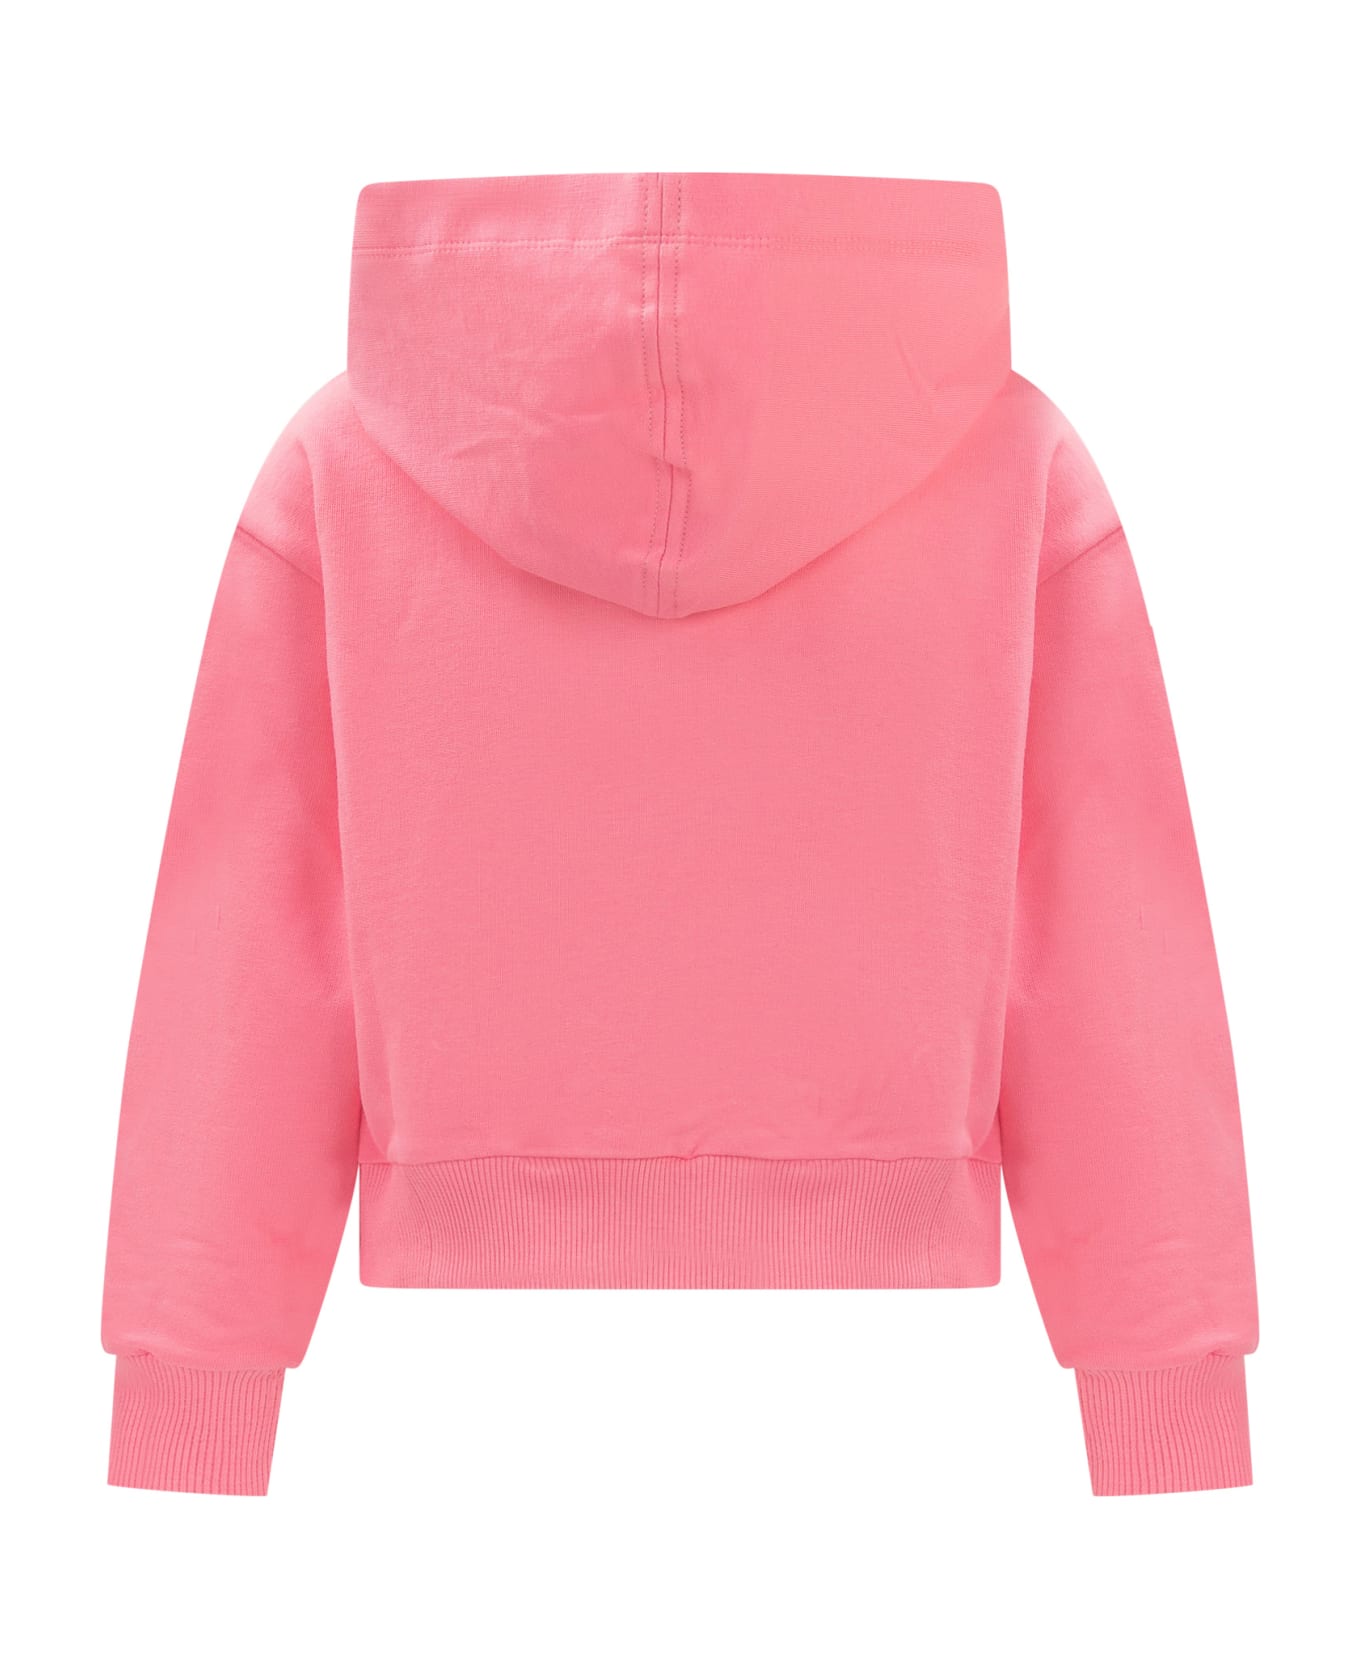 Chiara Ferragni Hooded Sweatshirt With Zip - ROSA